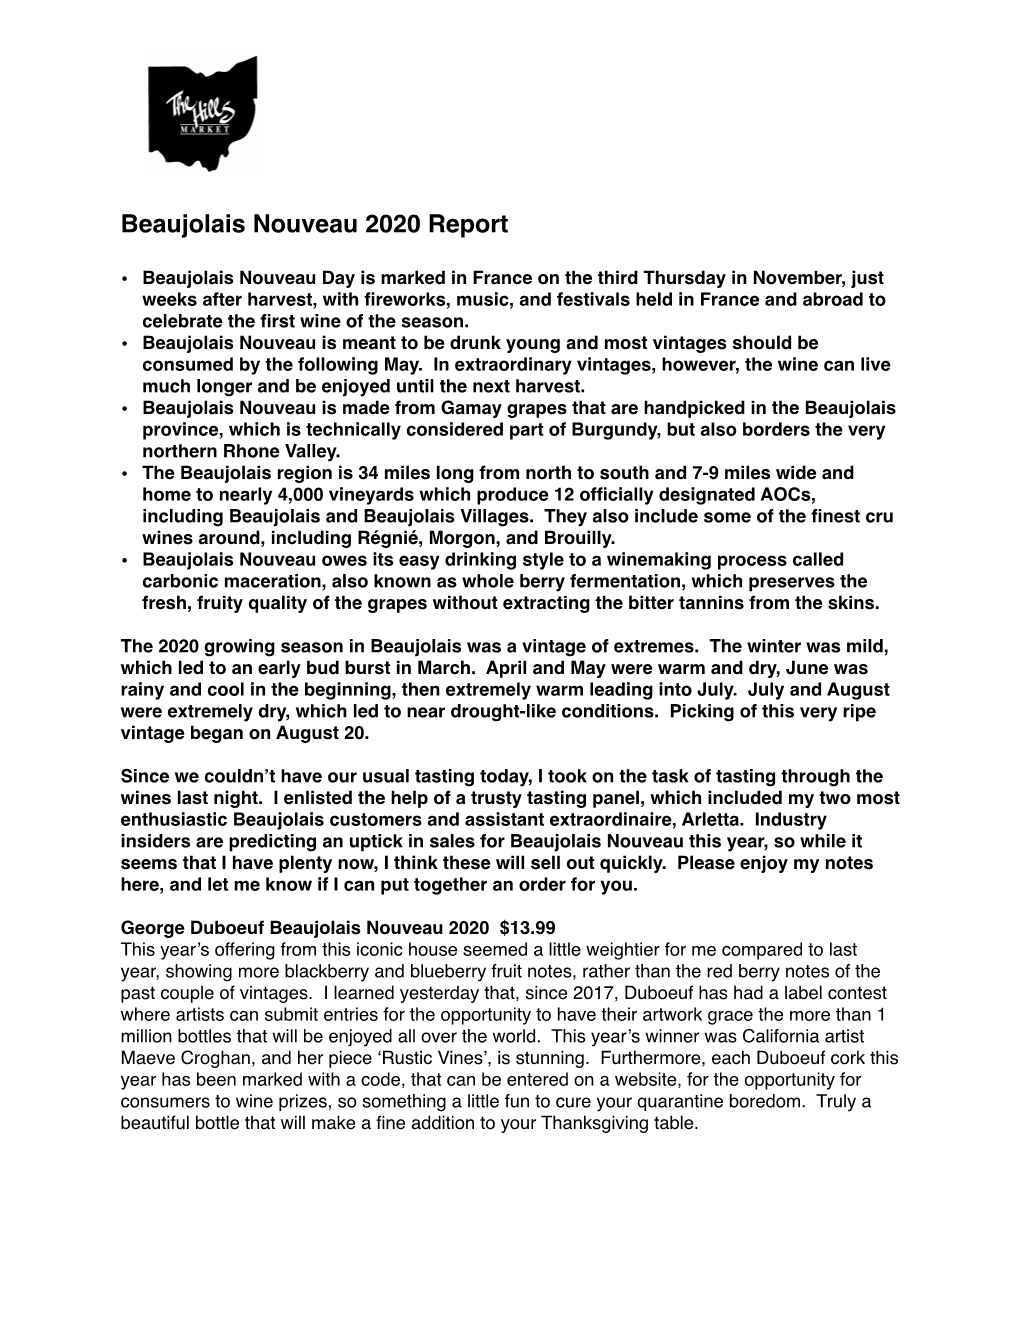 The 2020 Beaujolais Nouveau Report